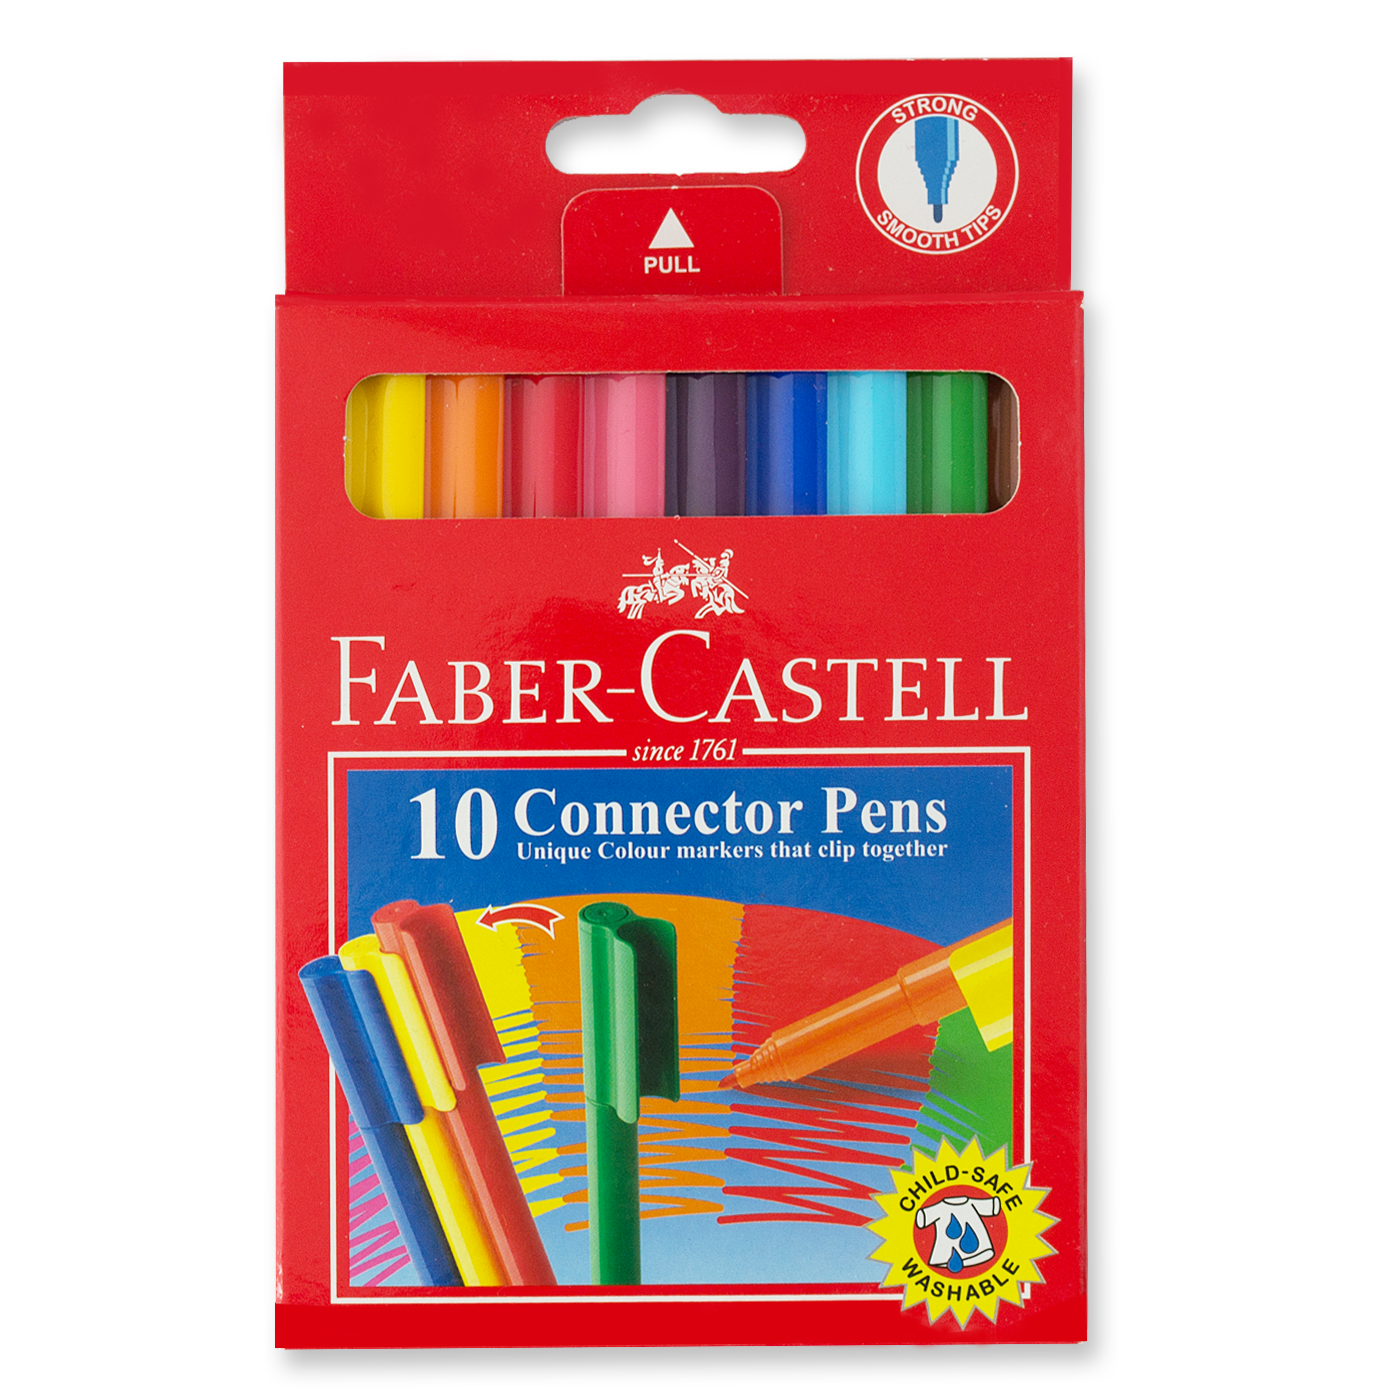 Faber-Castell Connector Pens Fibre Tip 10 Pack